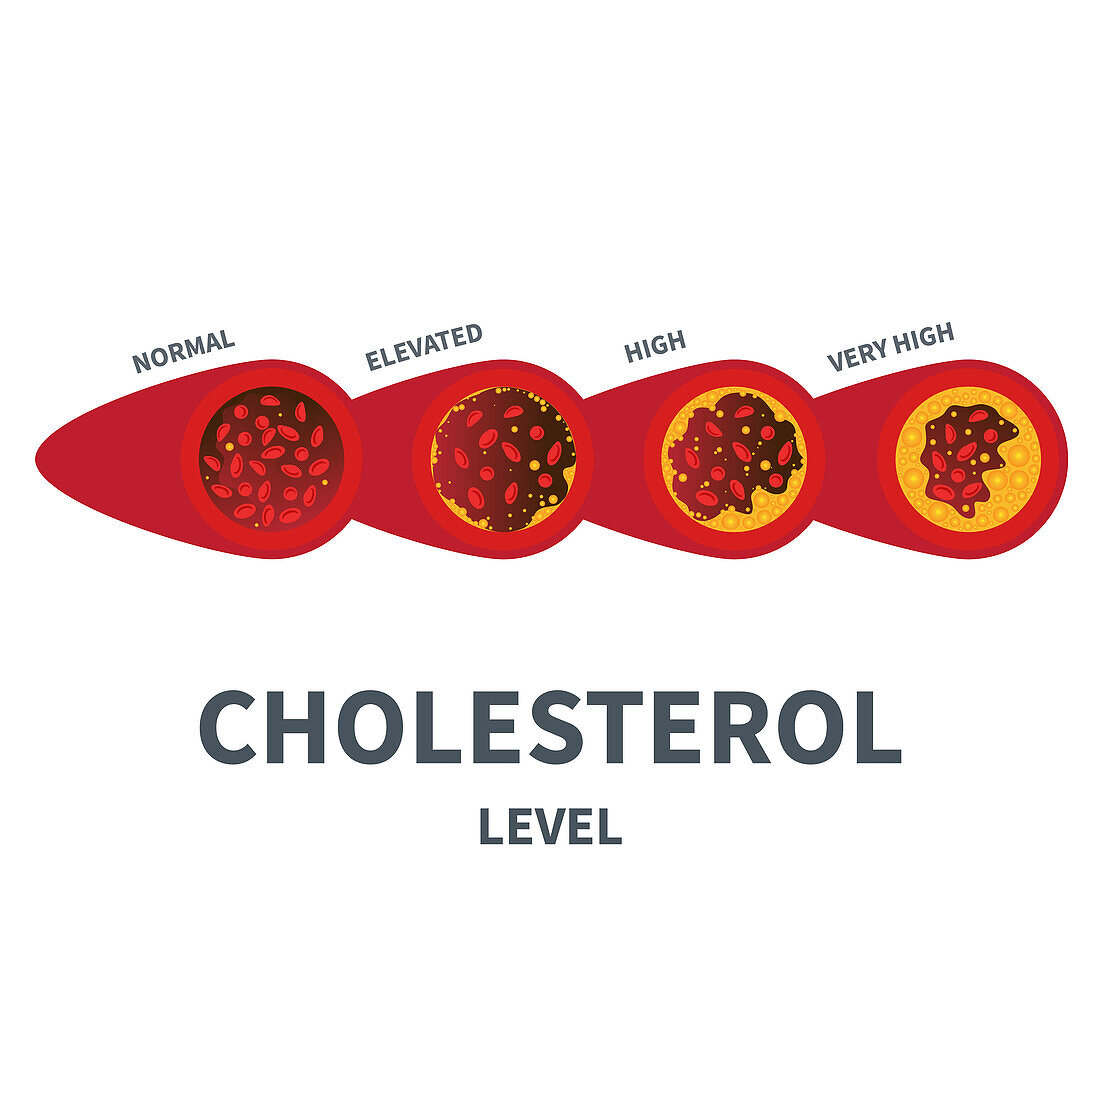 Cholesterol, conceptual illustration